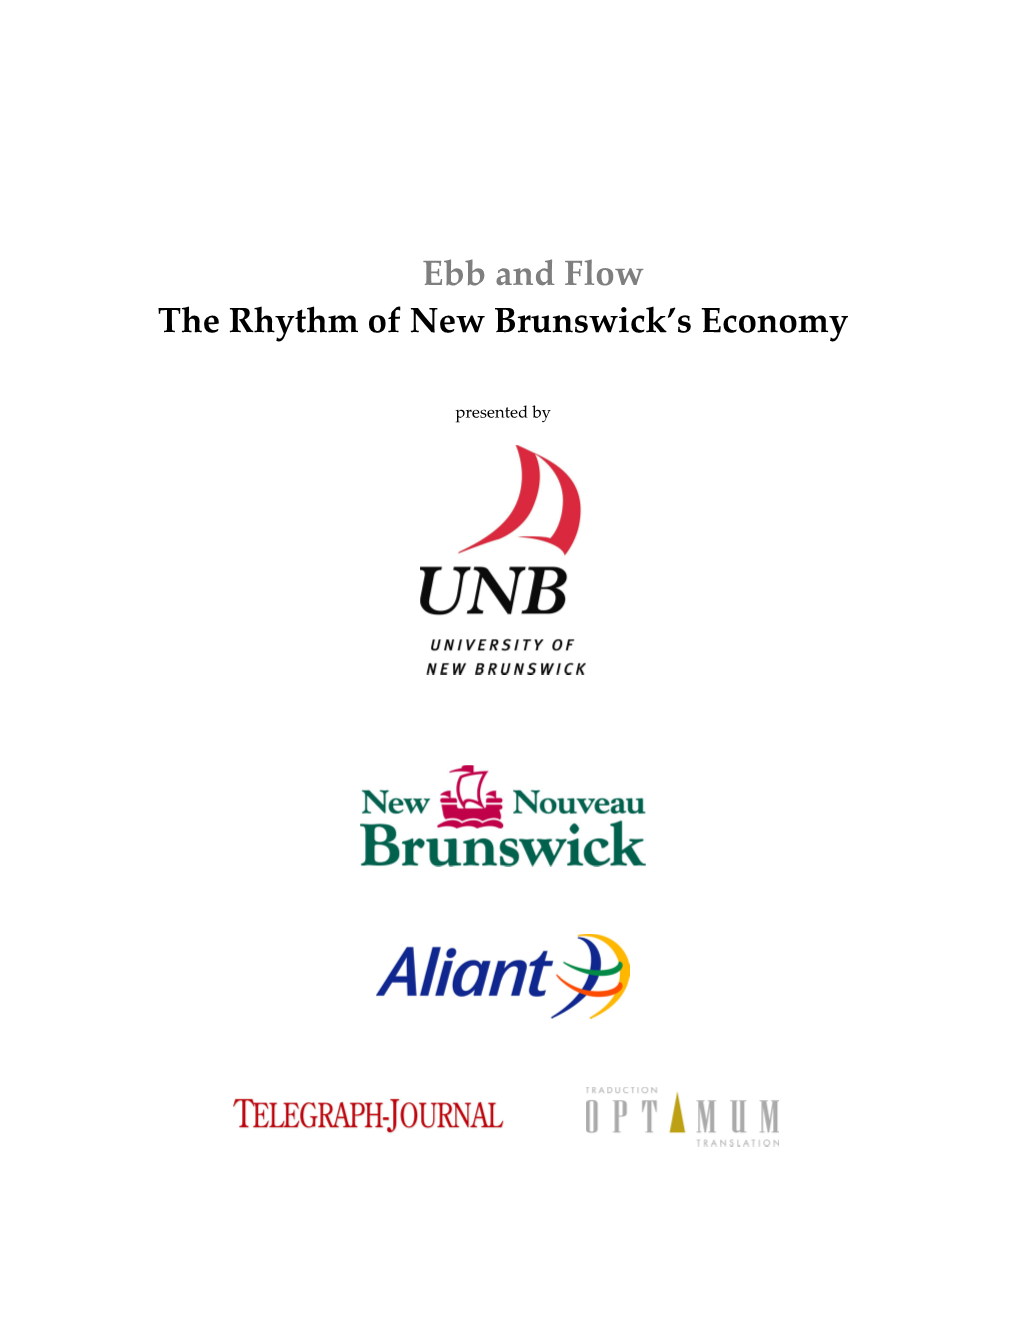 Ebb and Flow the Rhythm of New Brunswick's Economy